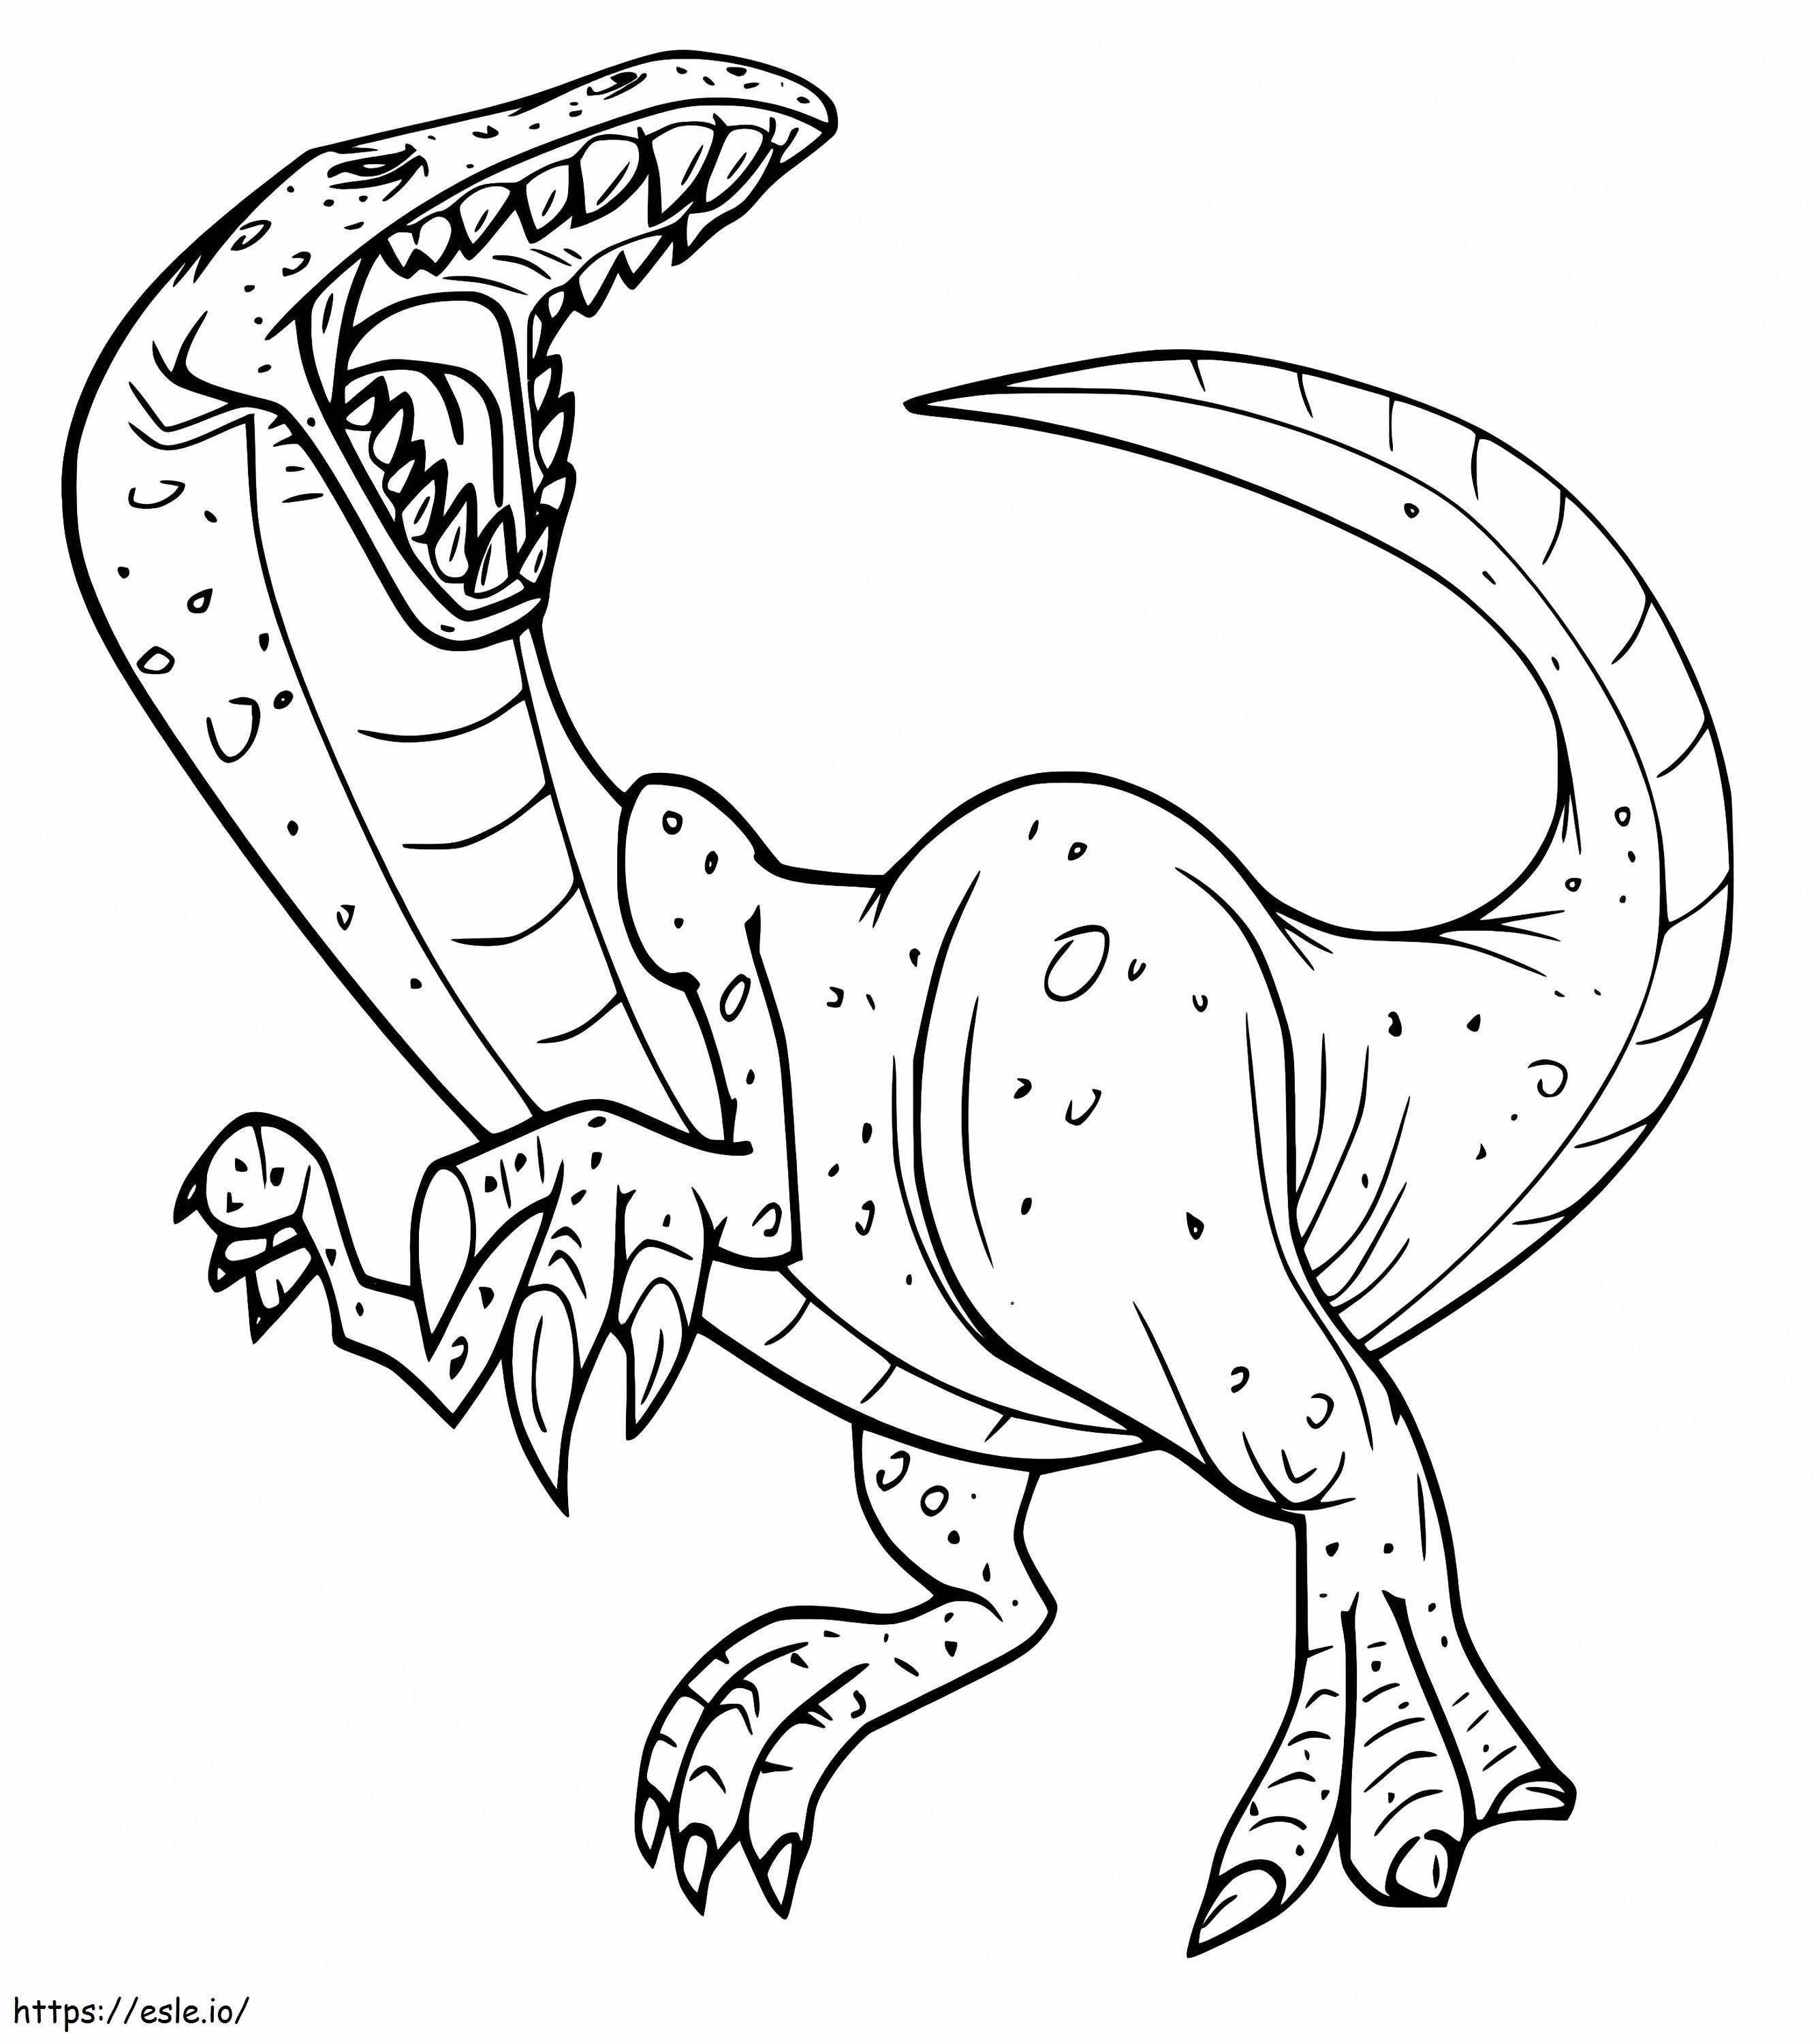 Alosaurio enojado para colorear